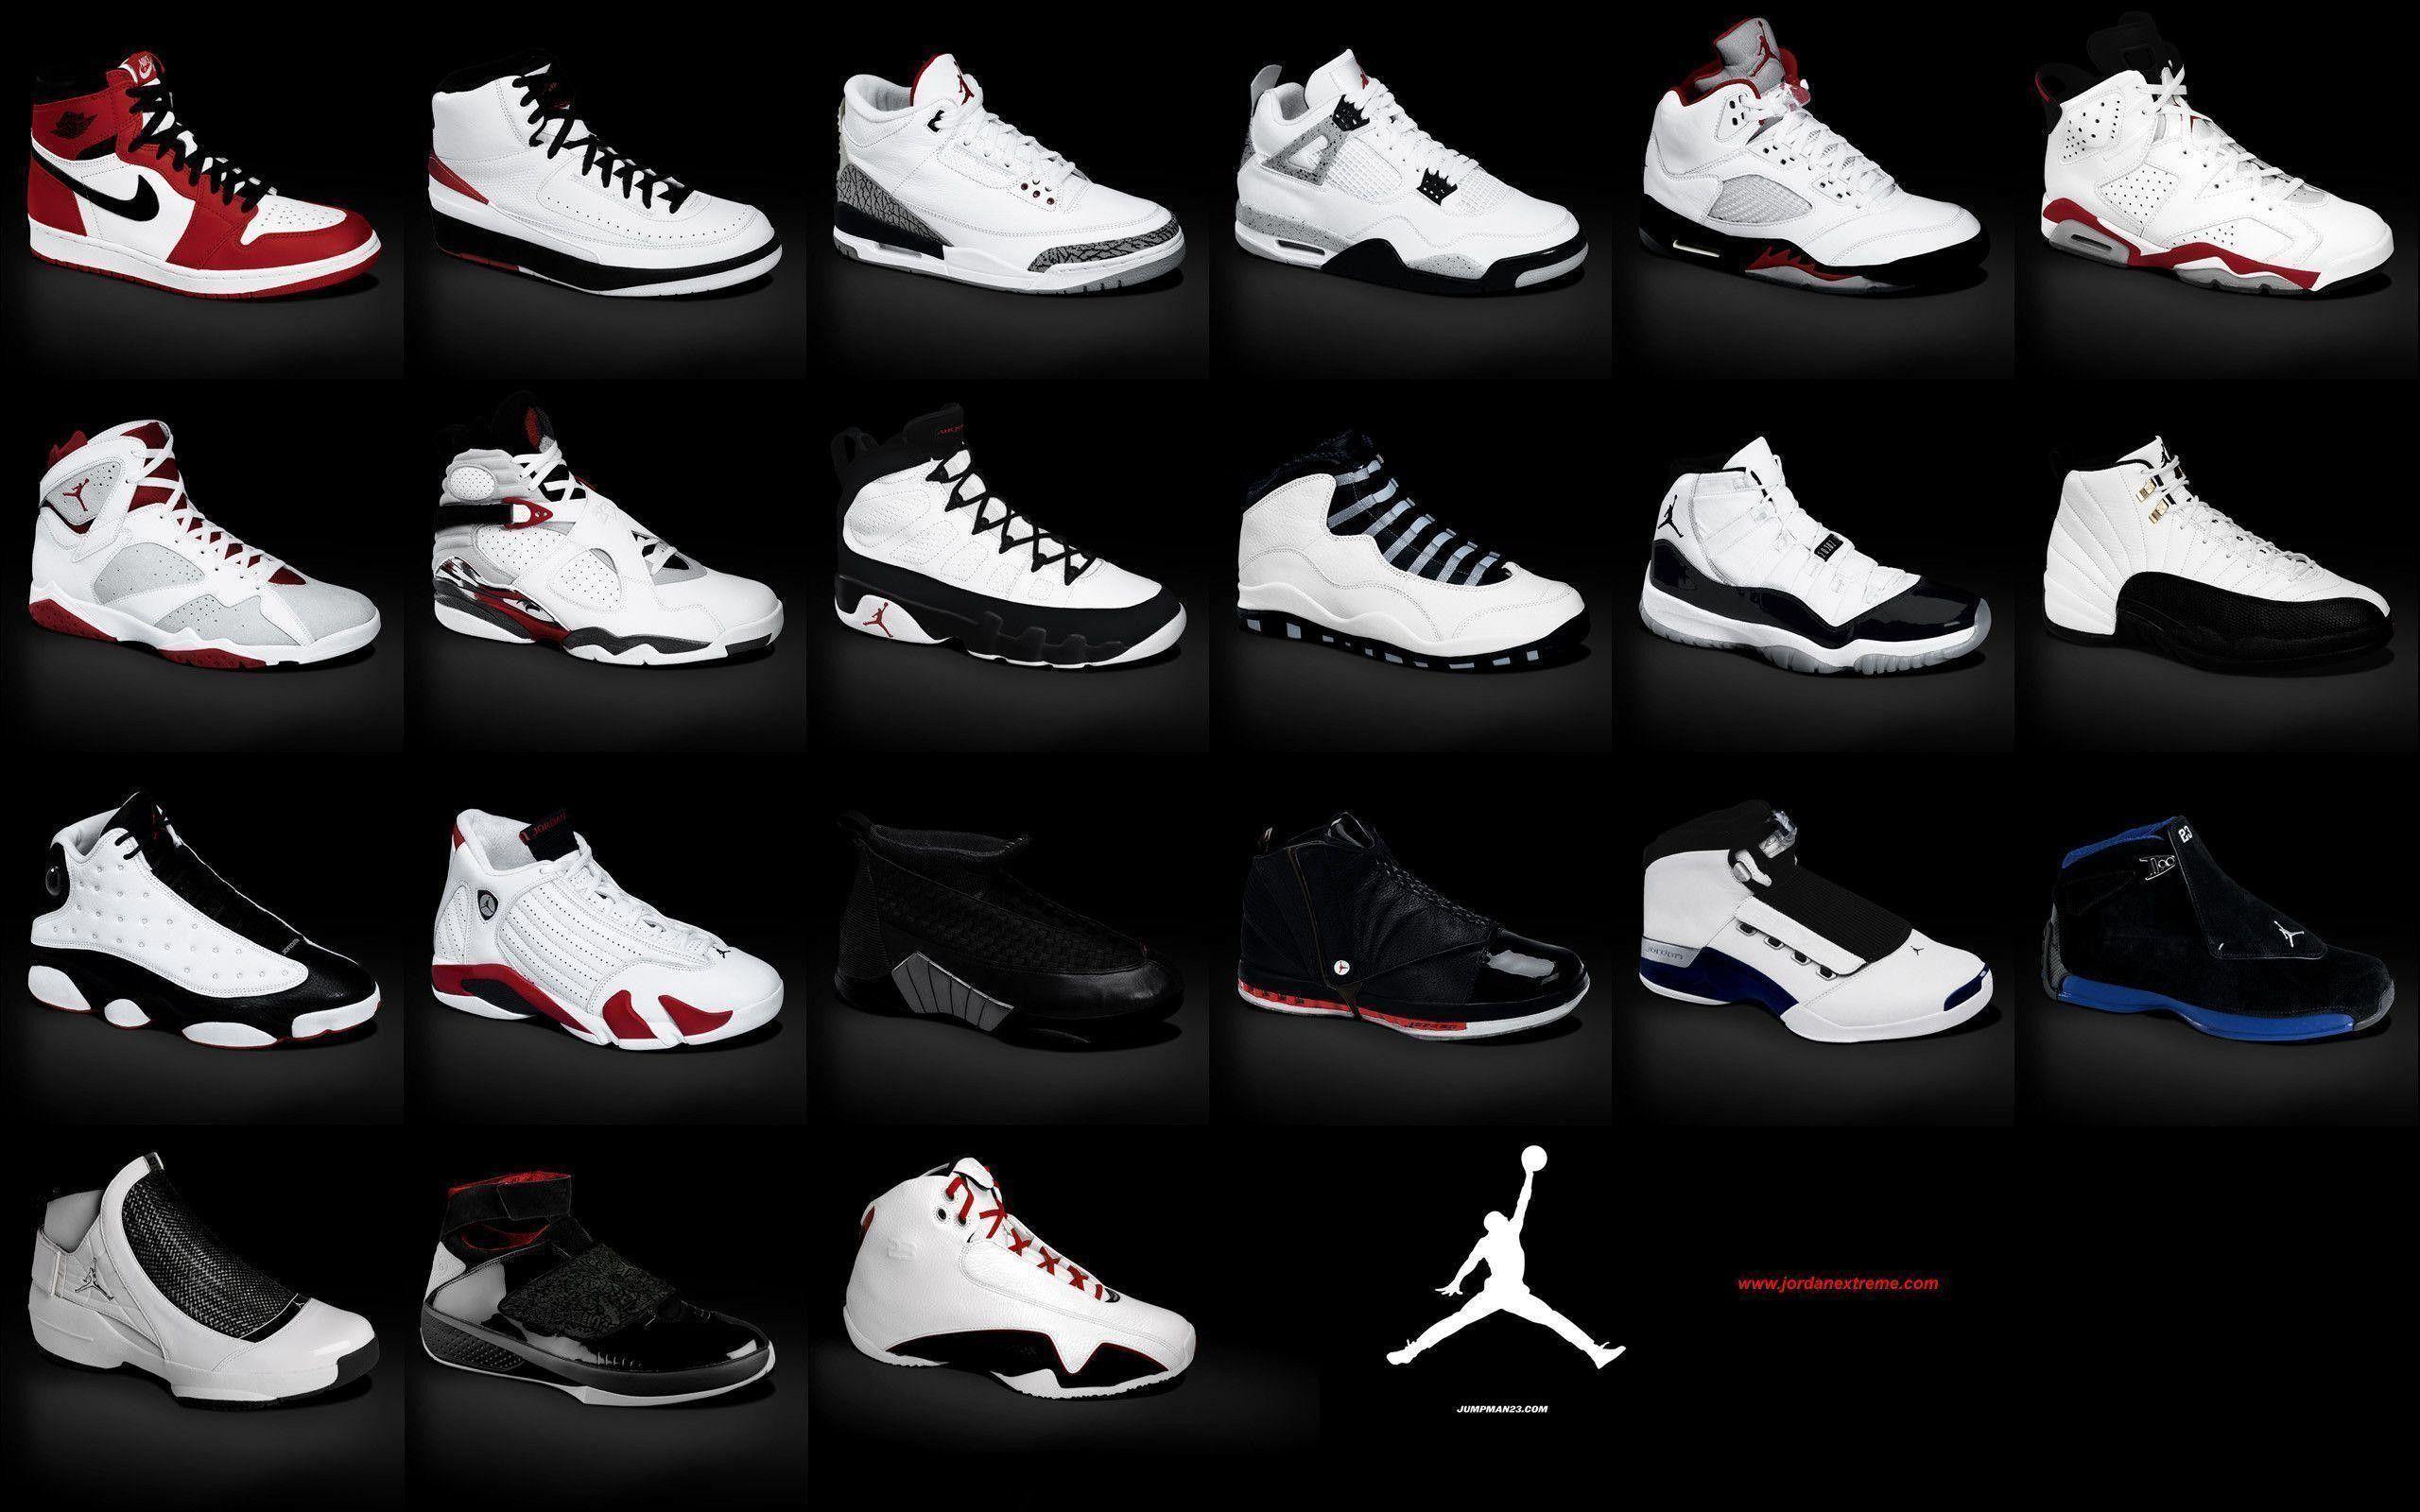 Michael Jordan Shoes Wallpaper